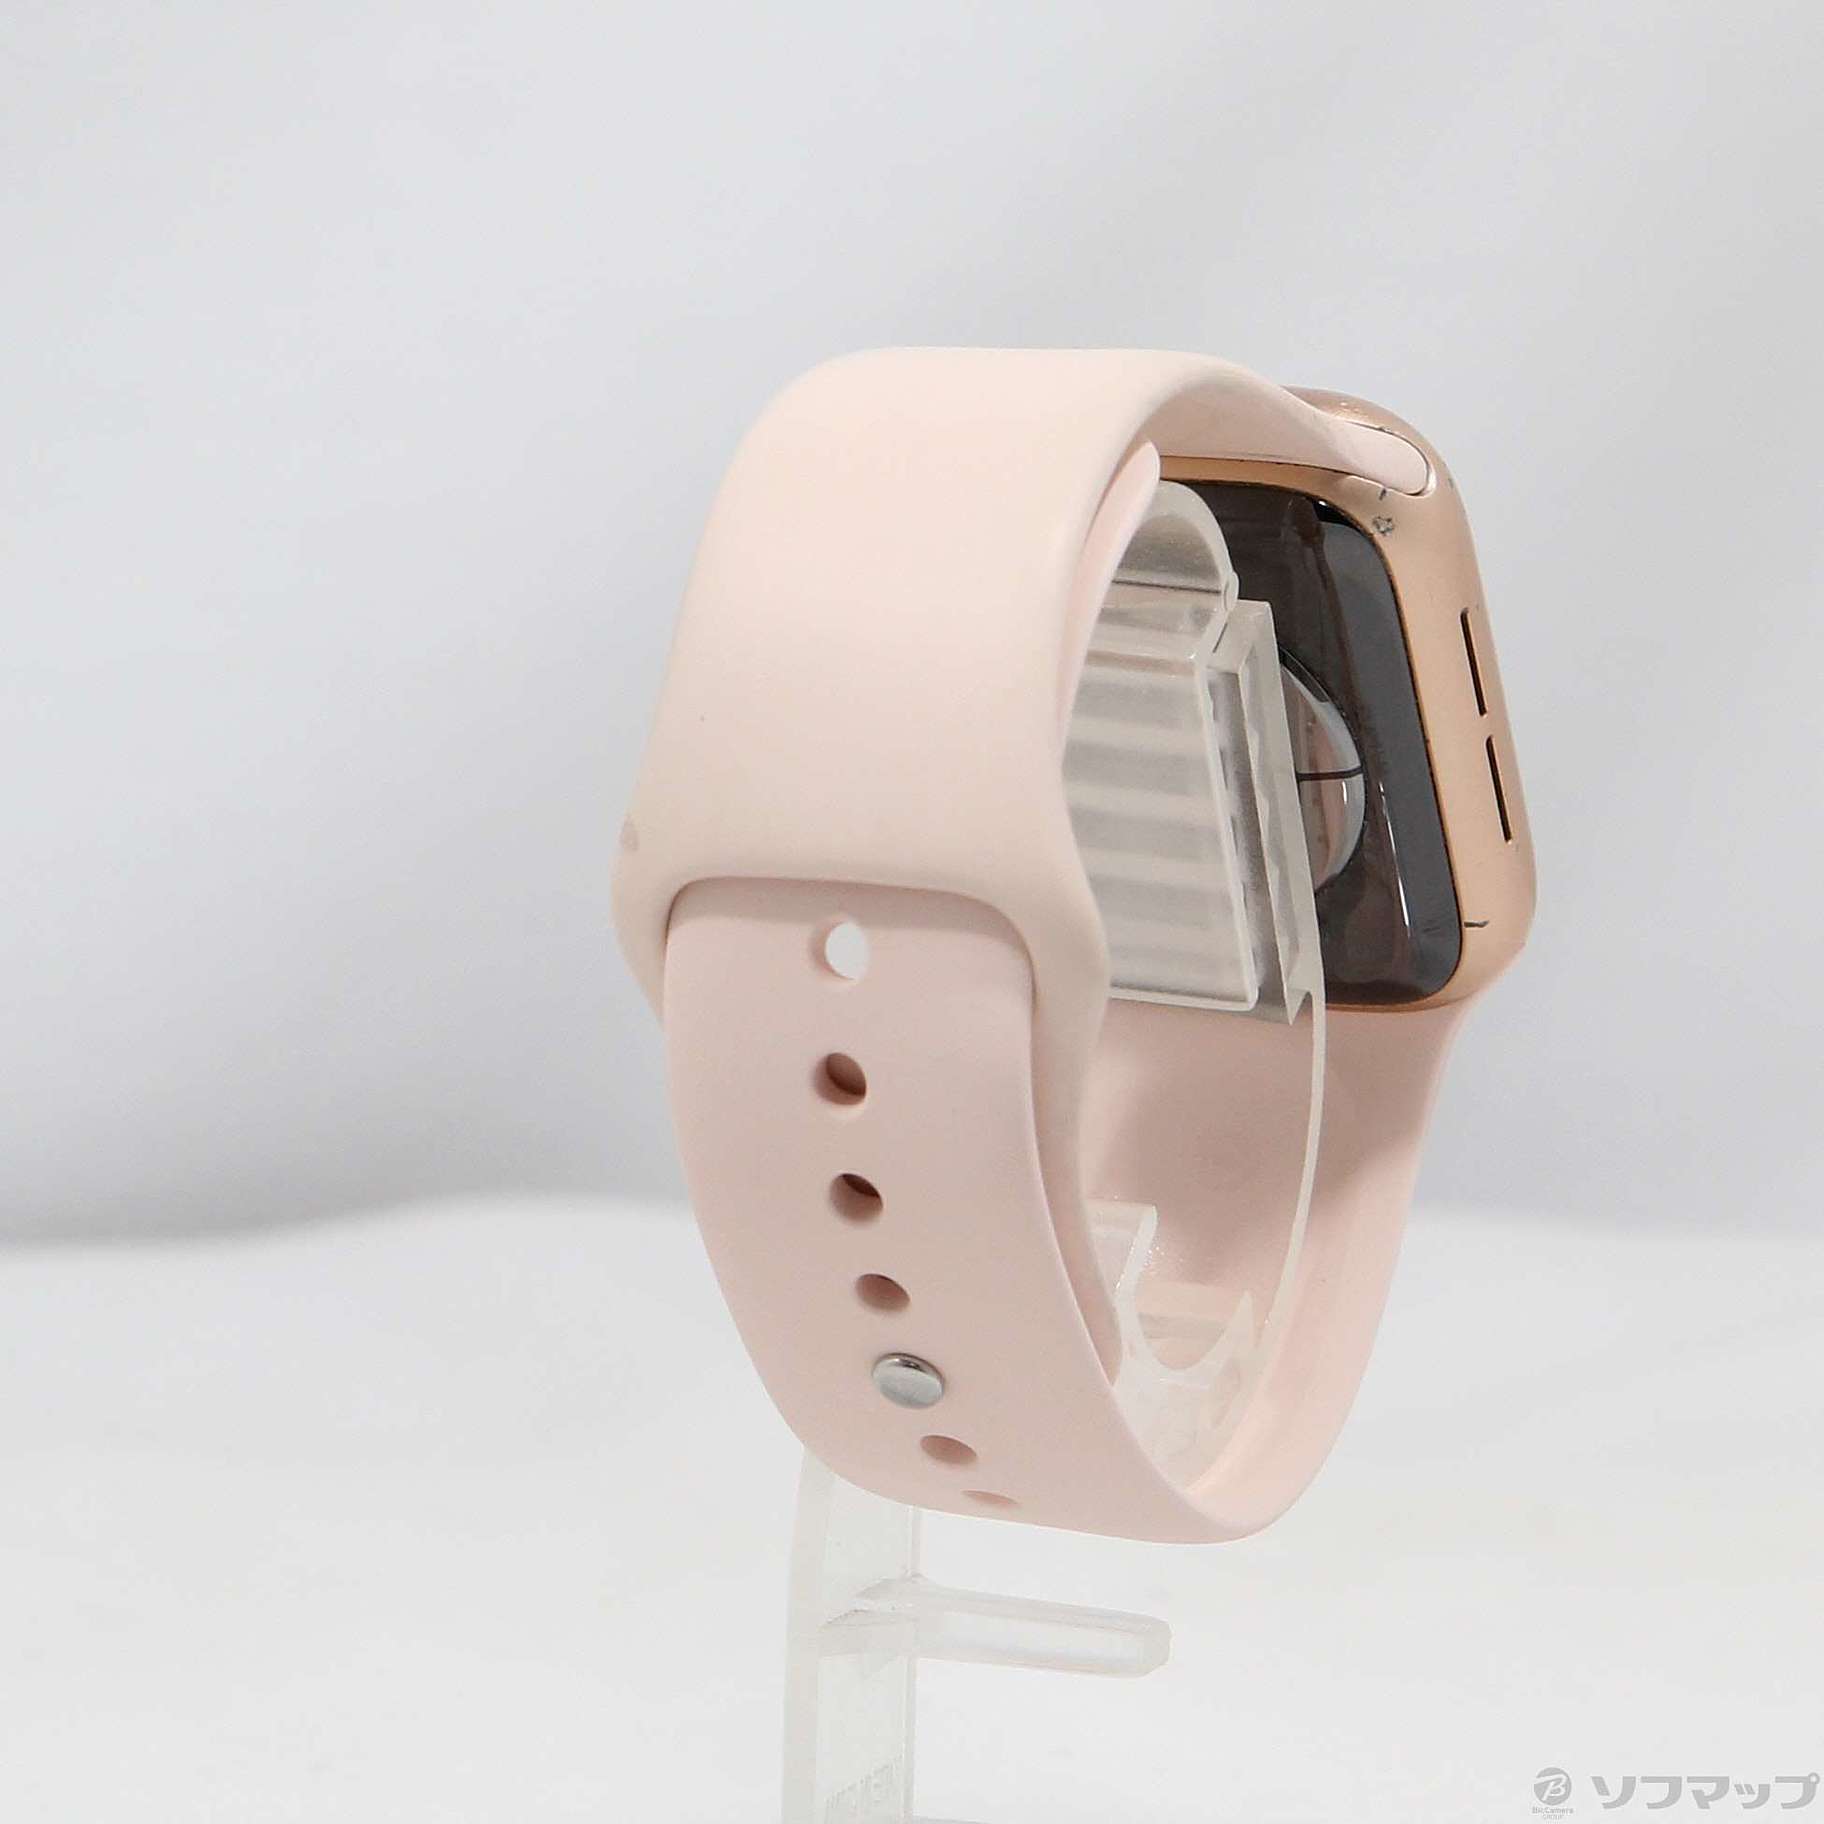 Apple Watch Series 4 GPS 40mm ゴールドアルミニウムケース ピンクサンドスポーツループ